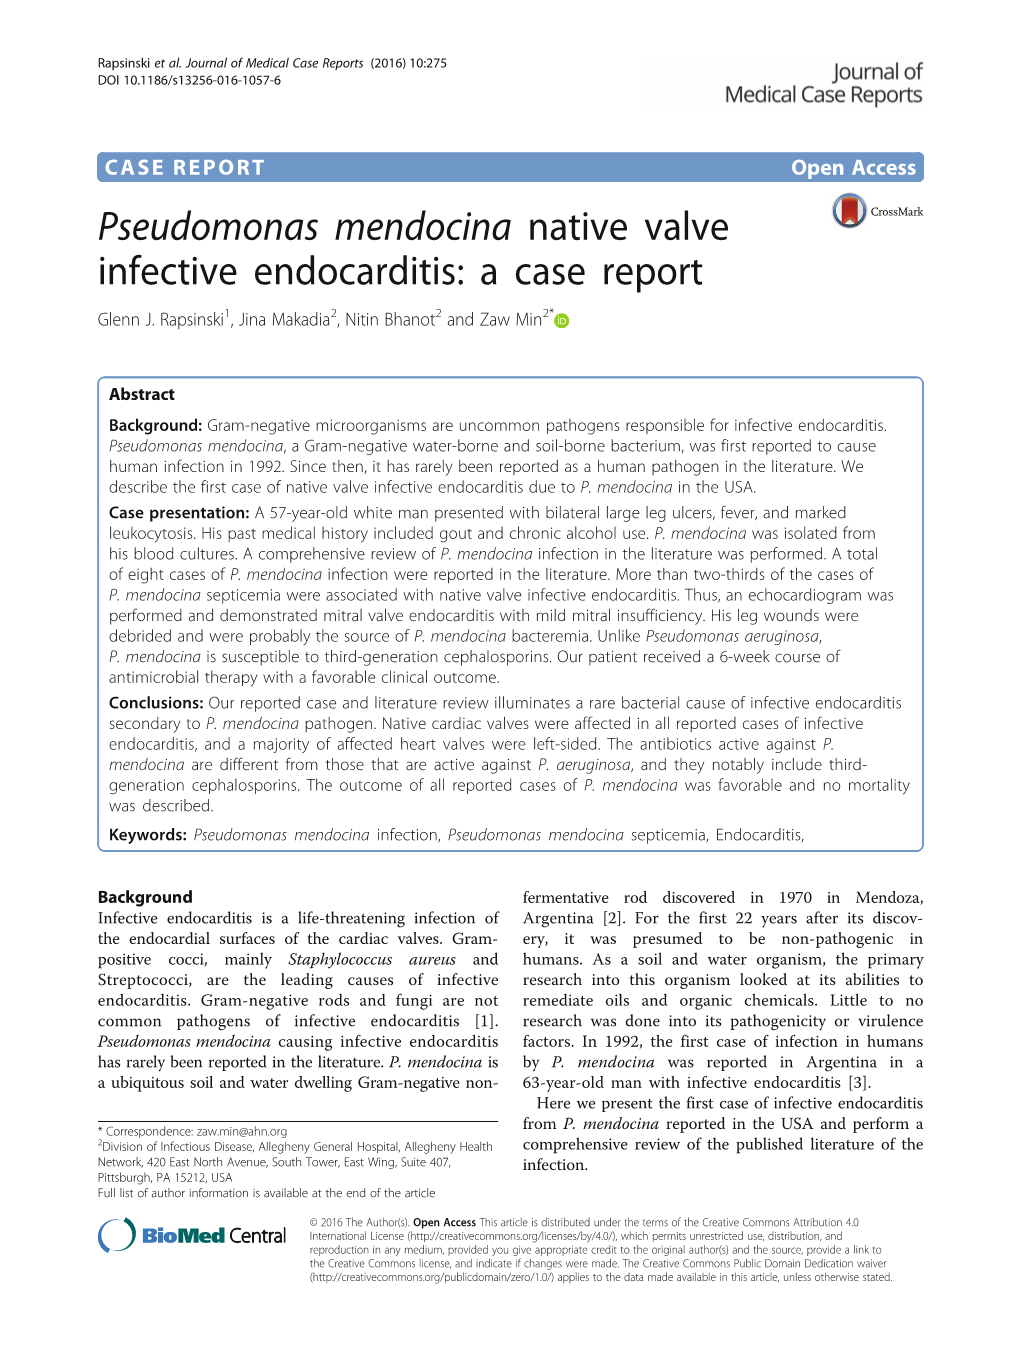 Pseudomonas Mendocina Native Valve Infective Endocarditis: a Case Report Glenn J